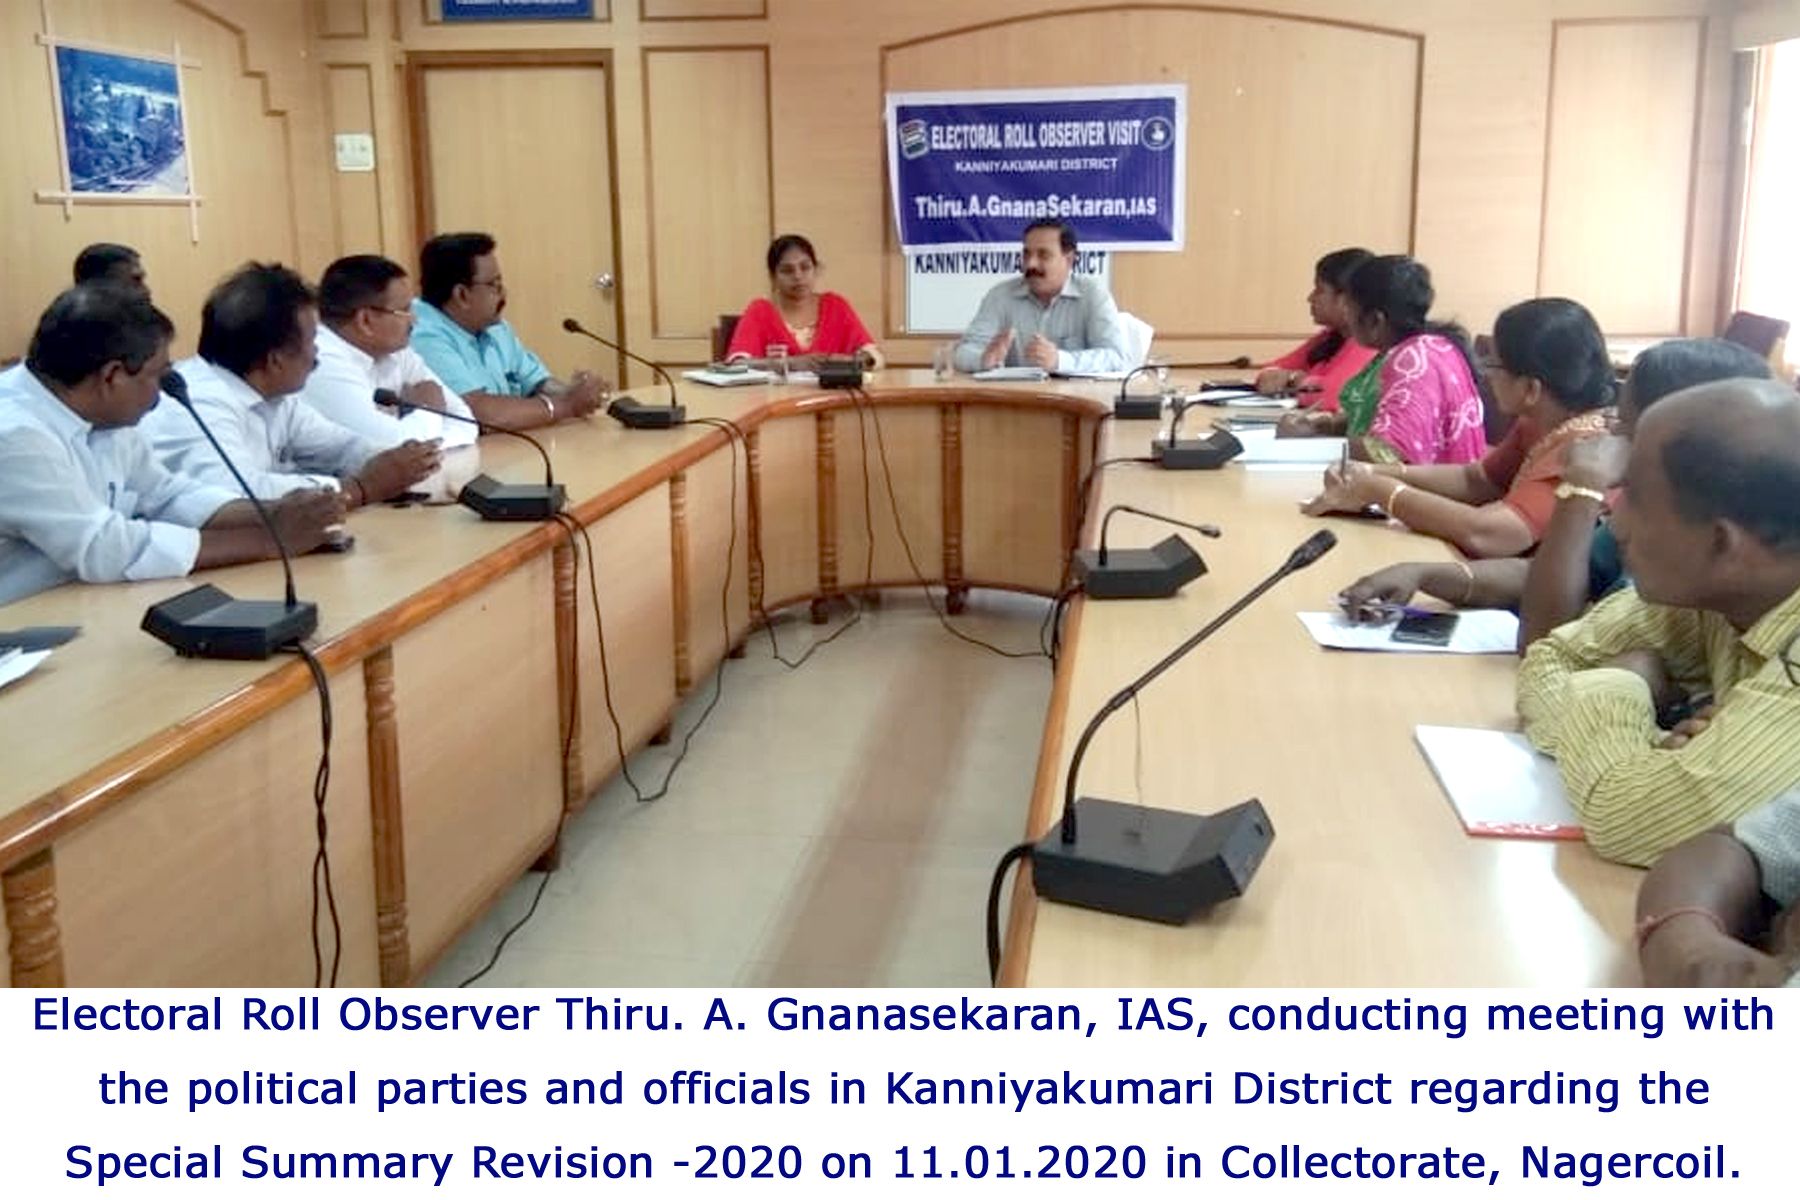 Electoral Roll Observer Thiru. A. Gnanasekaran IAS - First Visit.